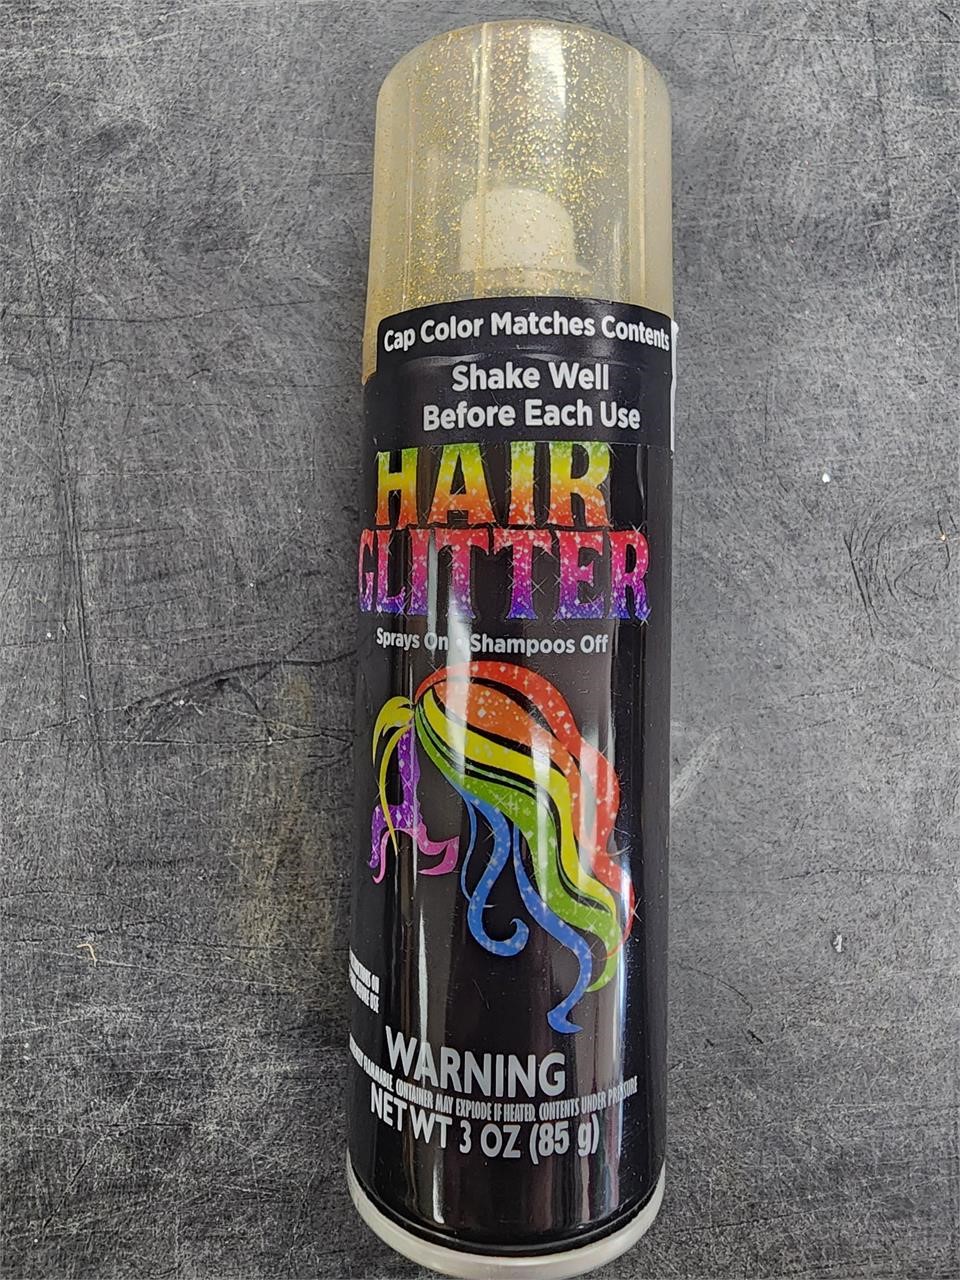 Glitter hair spray